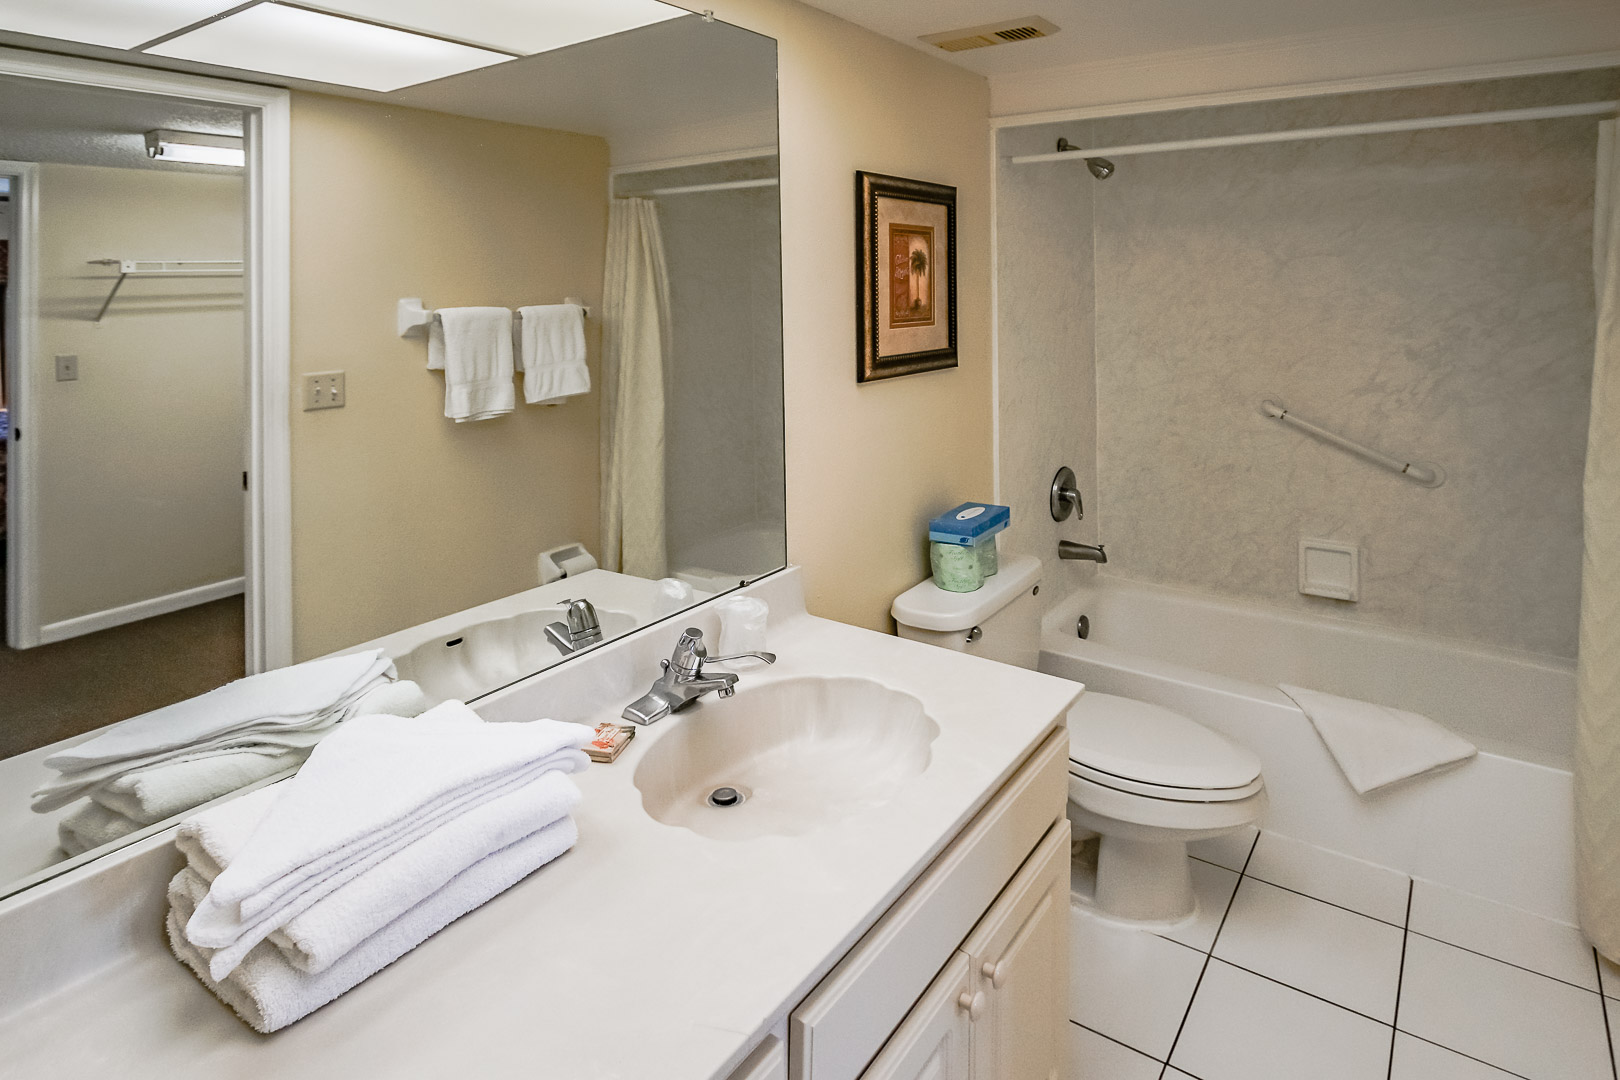 A clean bathroom at VRI's Sand Pebble Resort in Treasure Island, Florida.